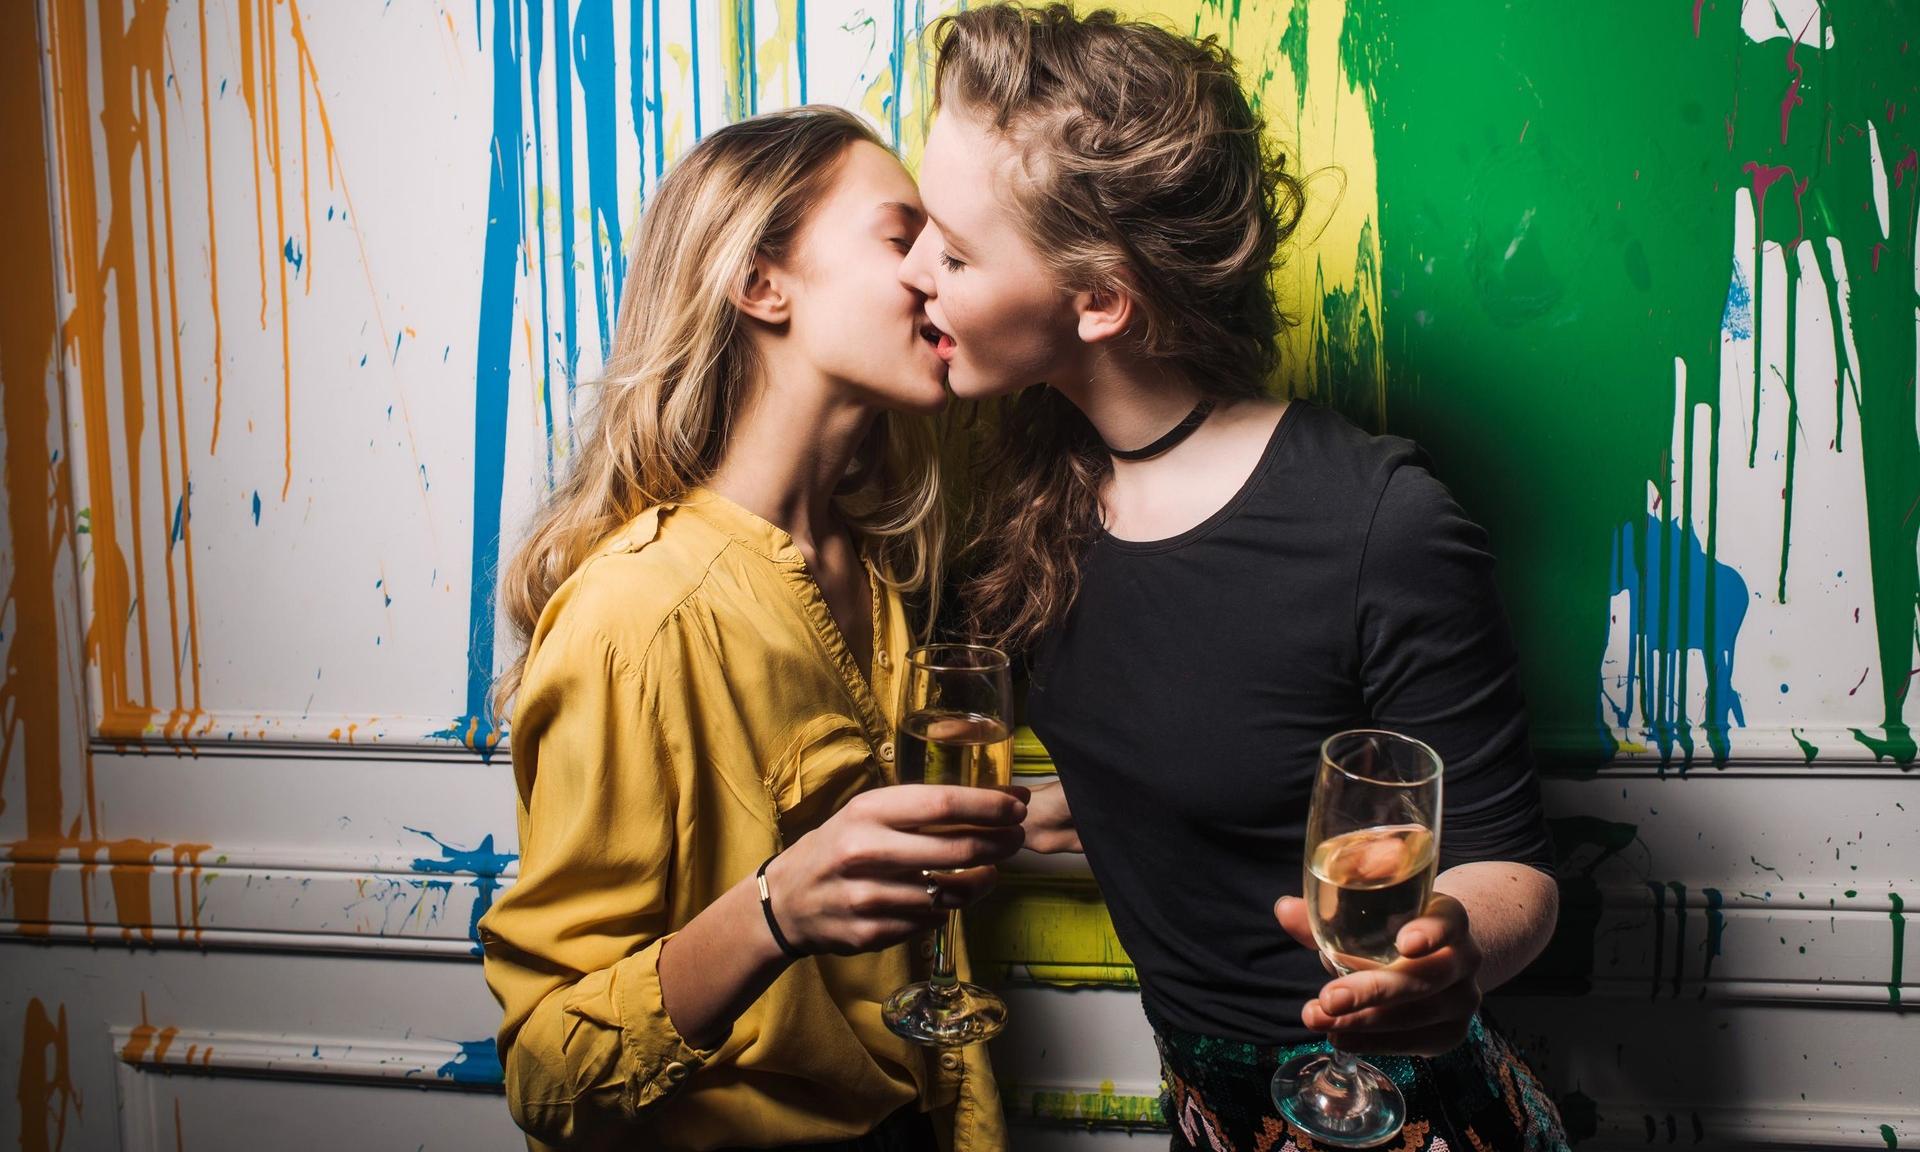 Порно видео Две девушки целуются без секса. Смотреть Две девушки целуются без секса онлайн